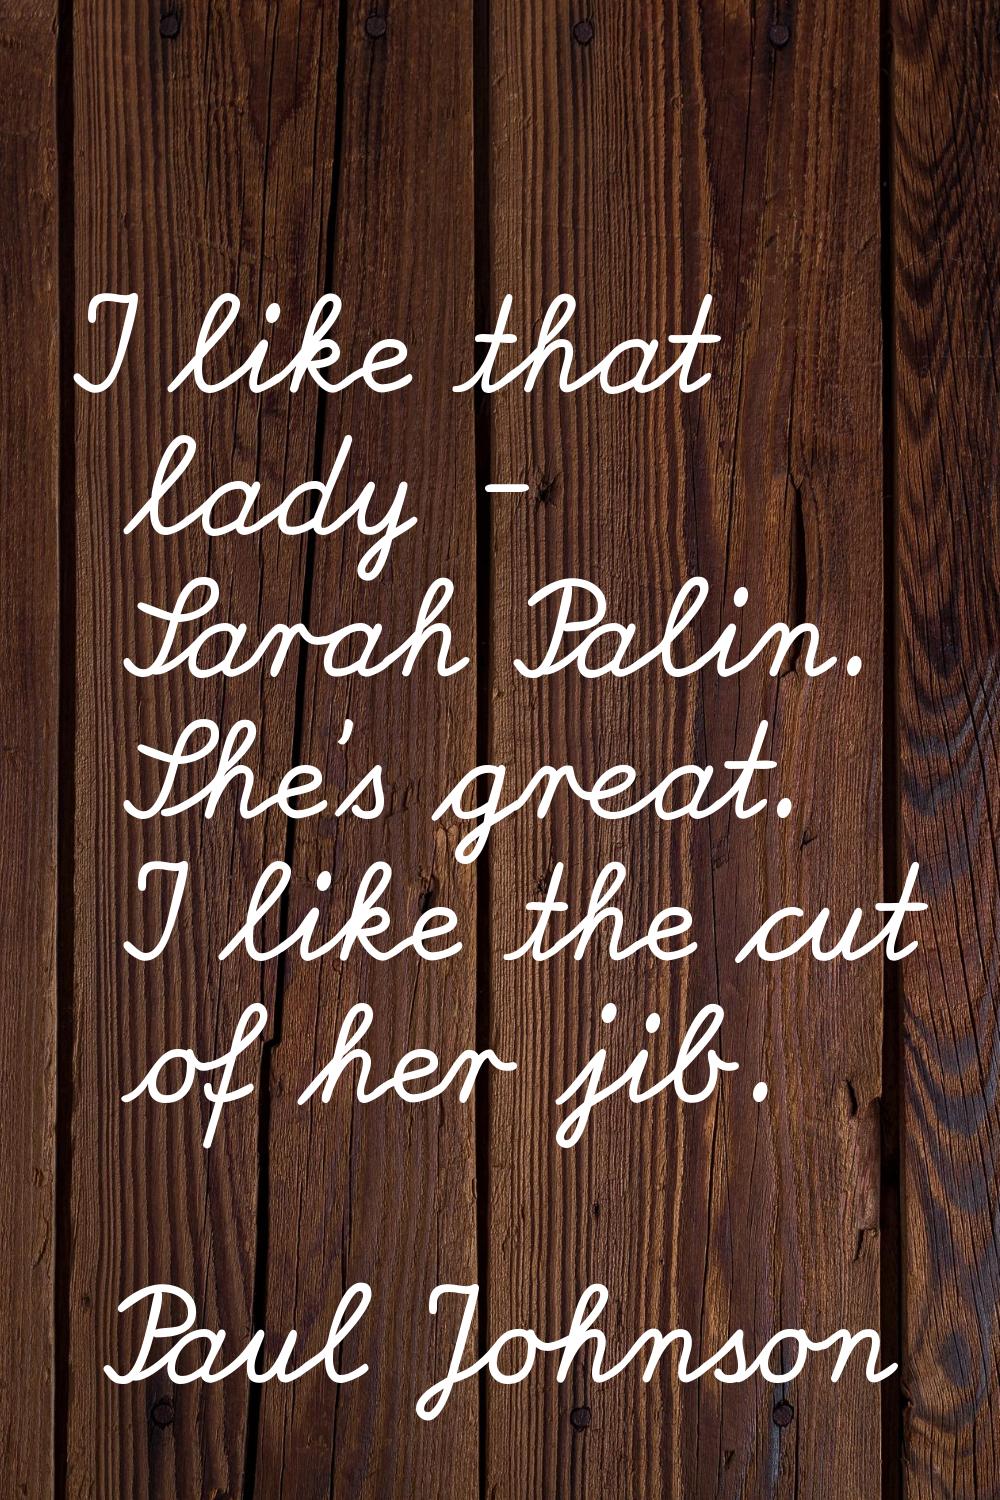 I like that lady - Sarah Palin. She's great. I like the cut of her jib.